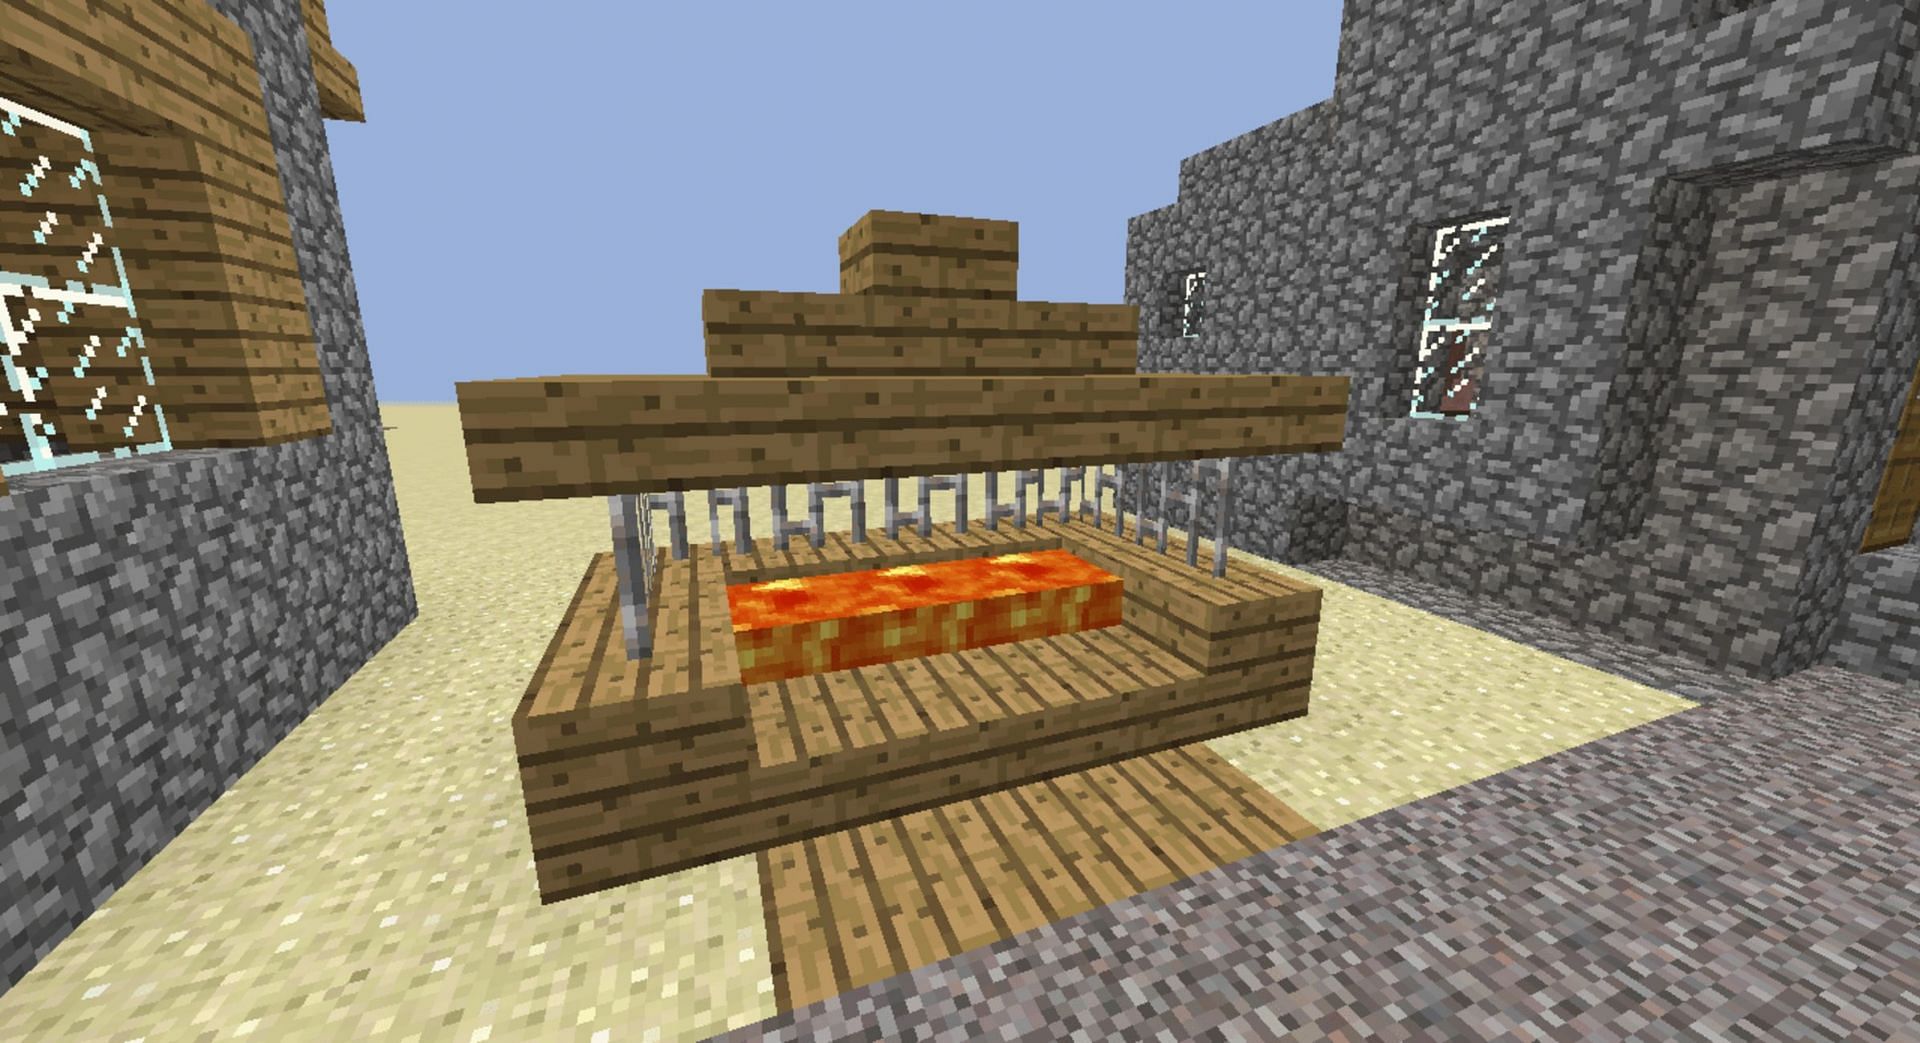 A fireproof furnace made of wooden slabs (Image via u/Mepe_ruse/Reddit)